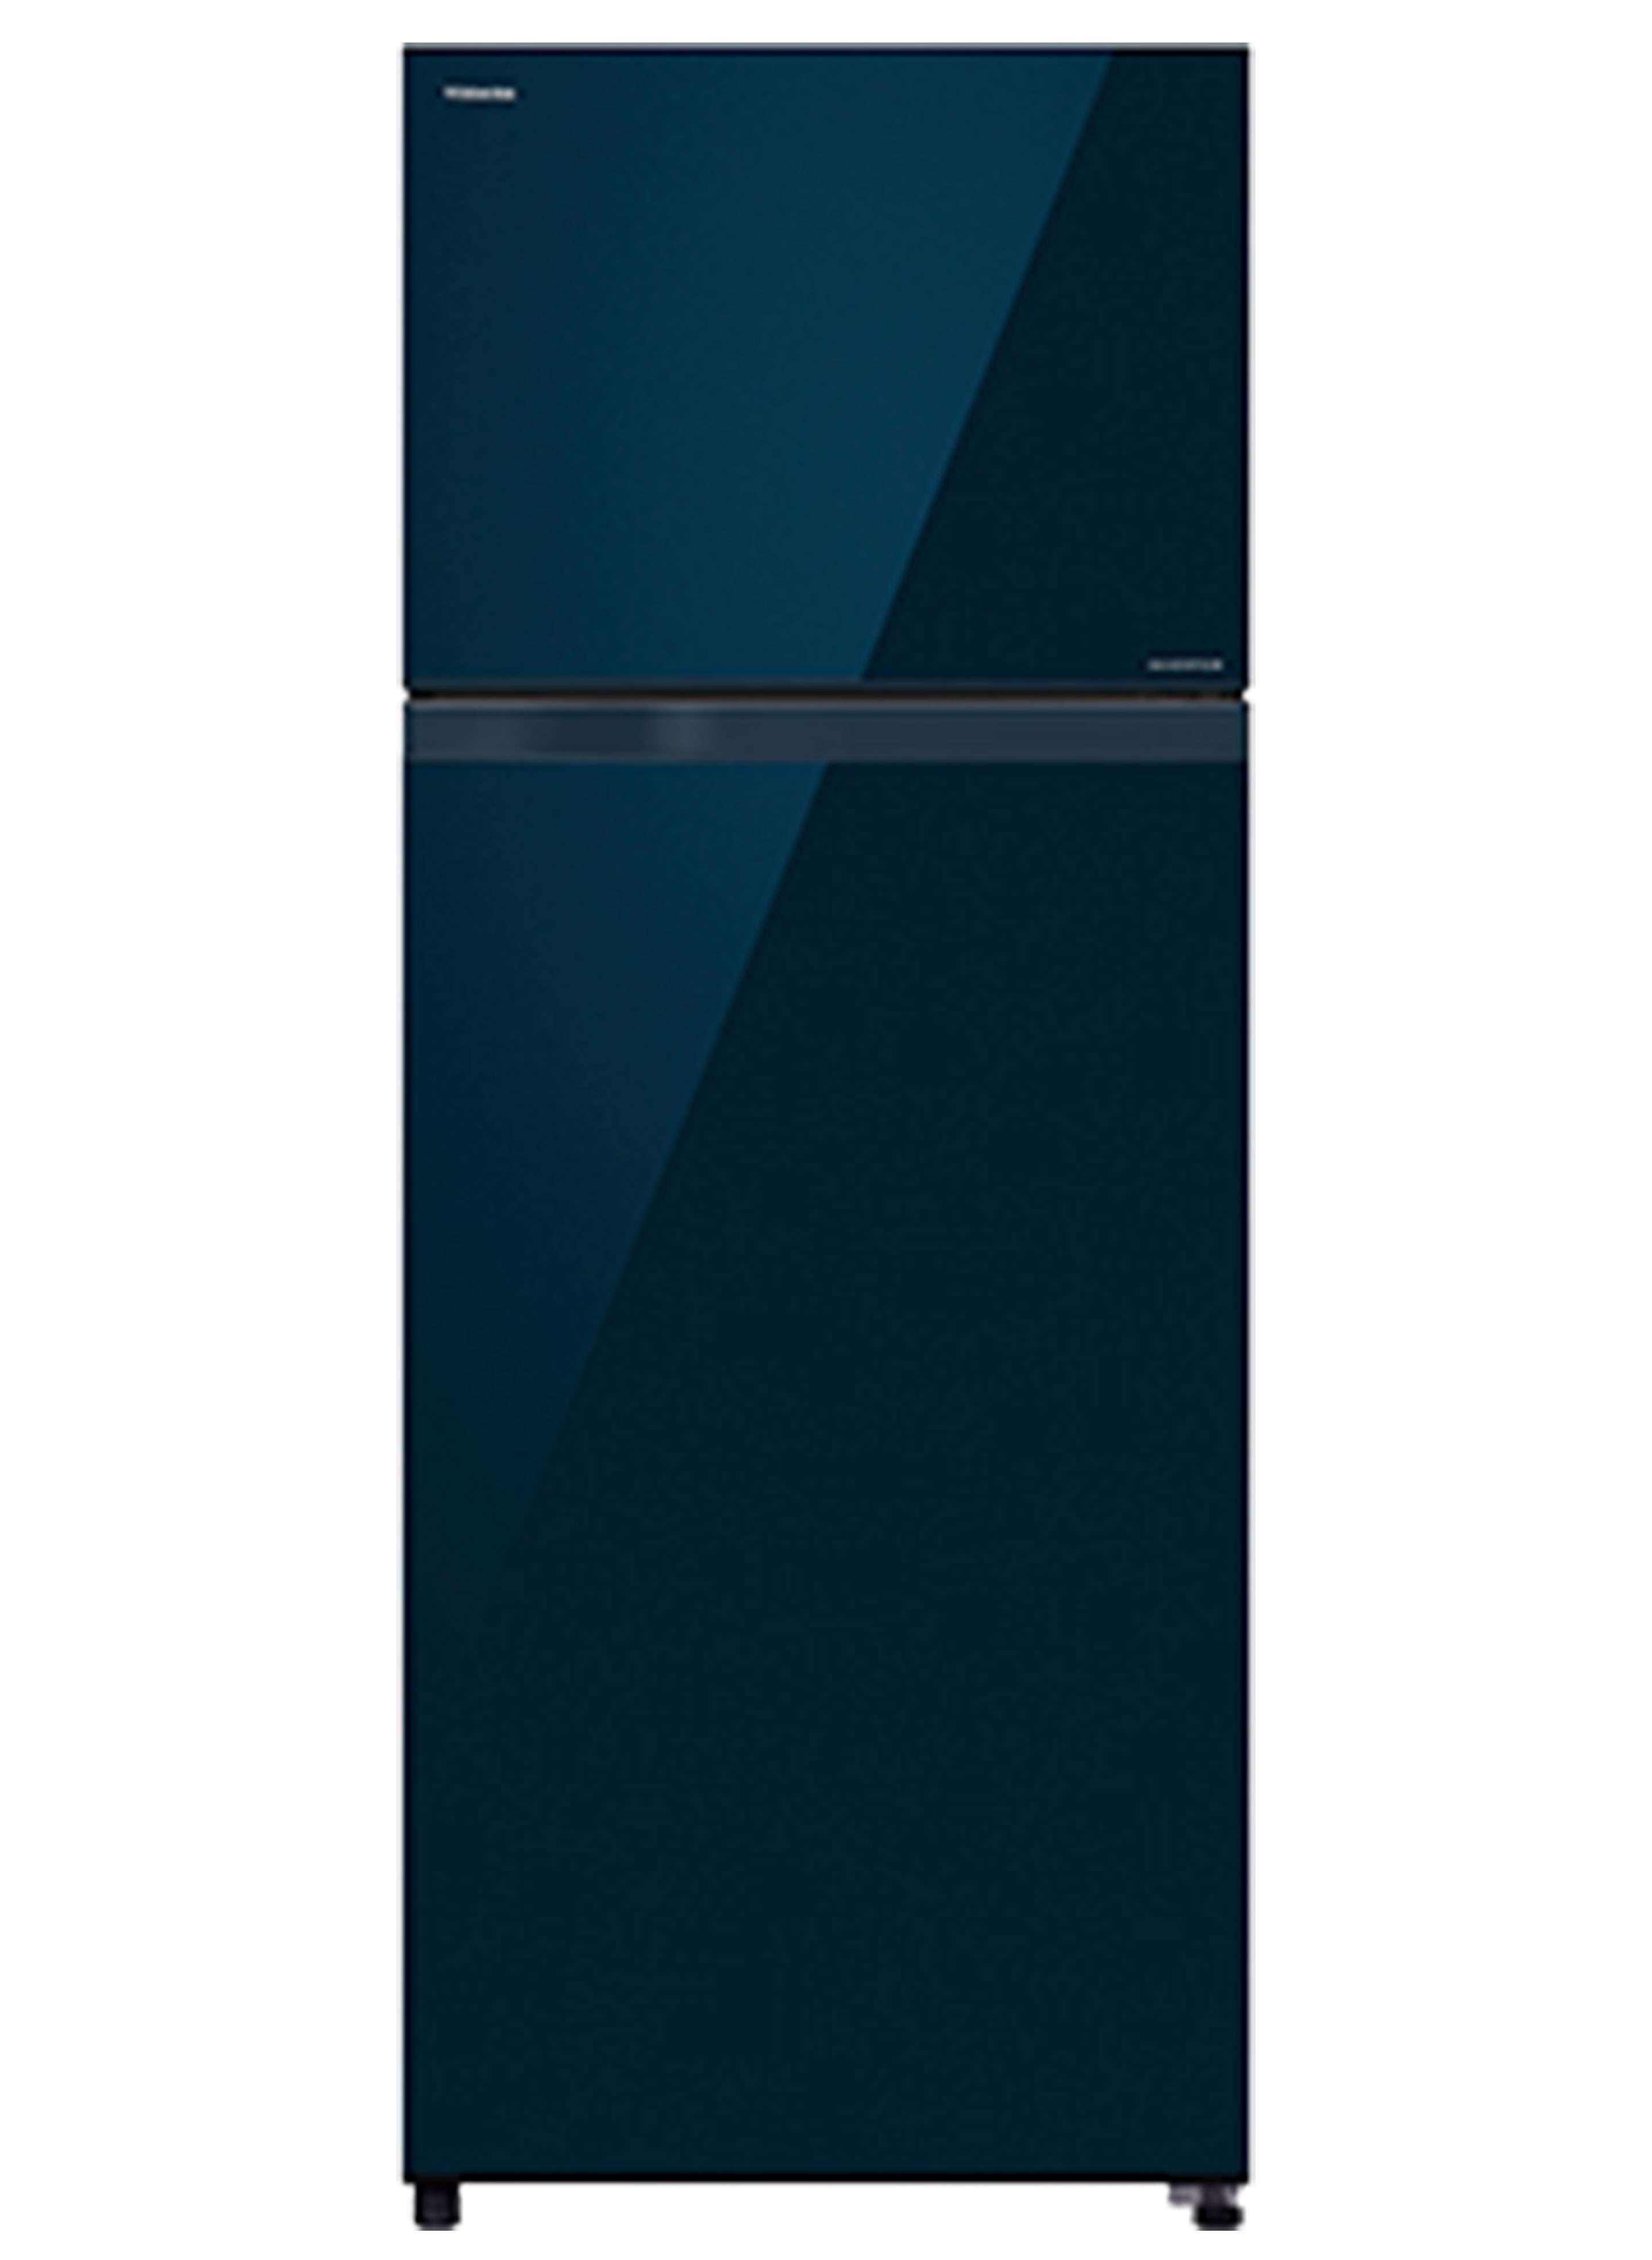 Glass Door Refrigerator Blue Green From Front